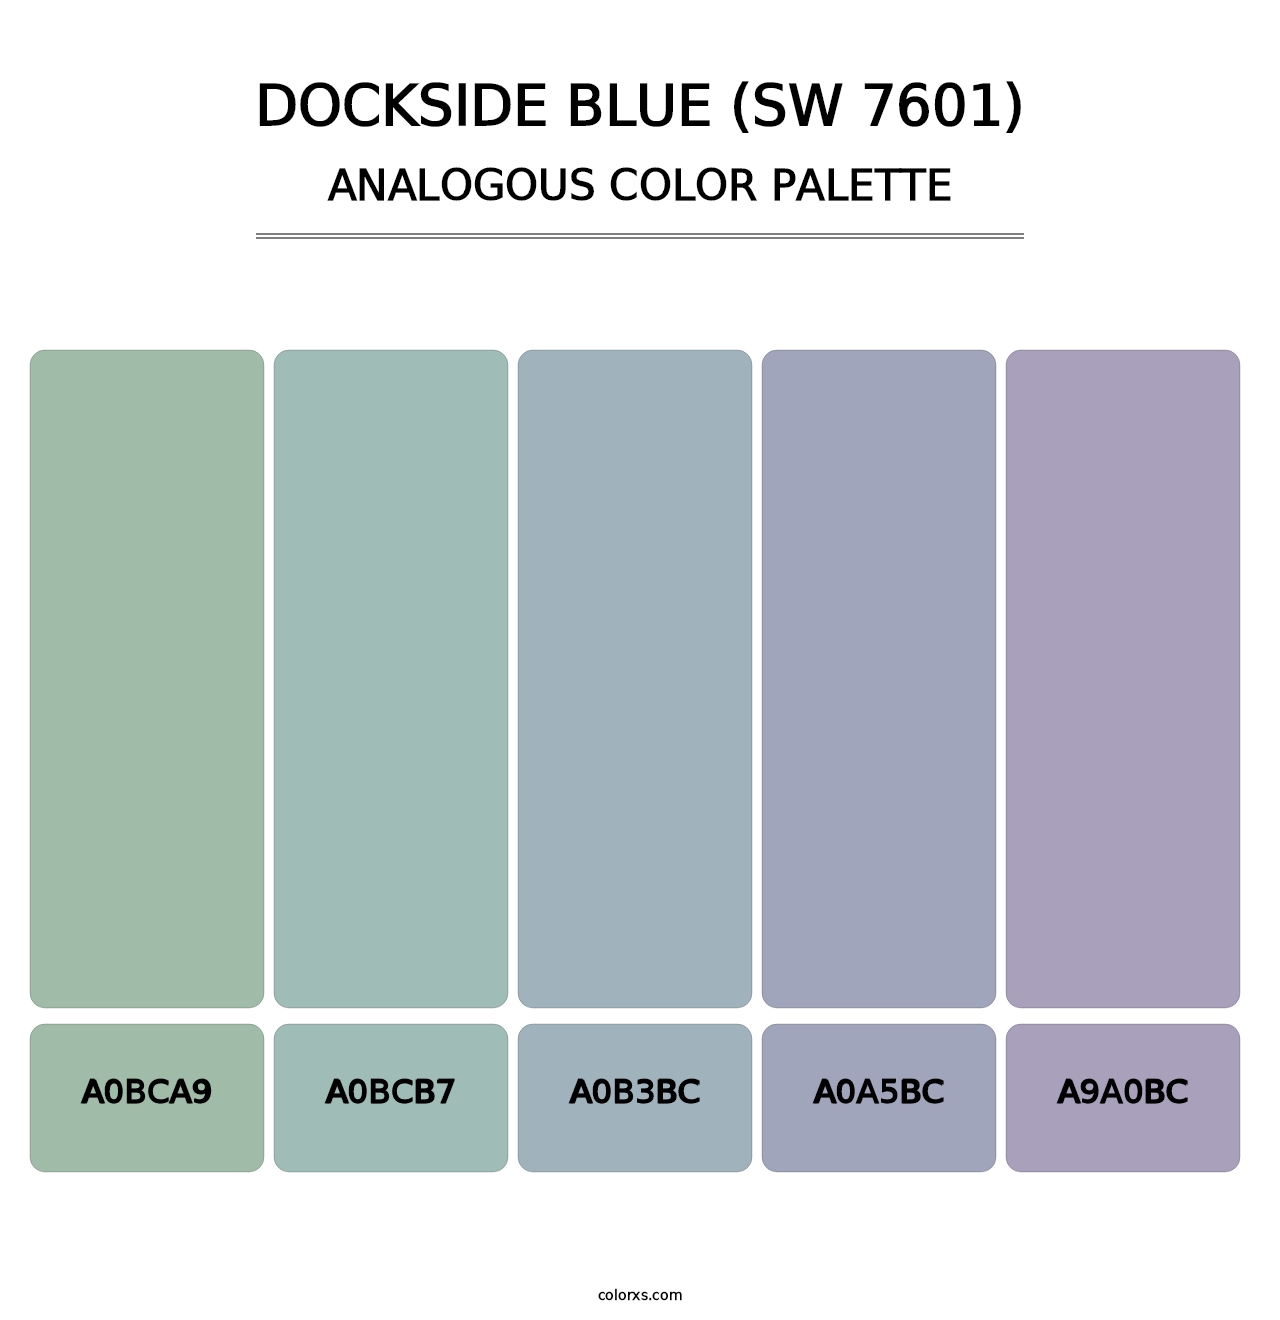 Dockside Blue (SW 7601) - Analogous Color Palette